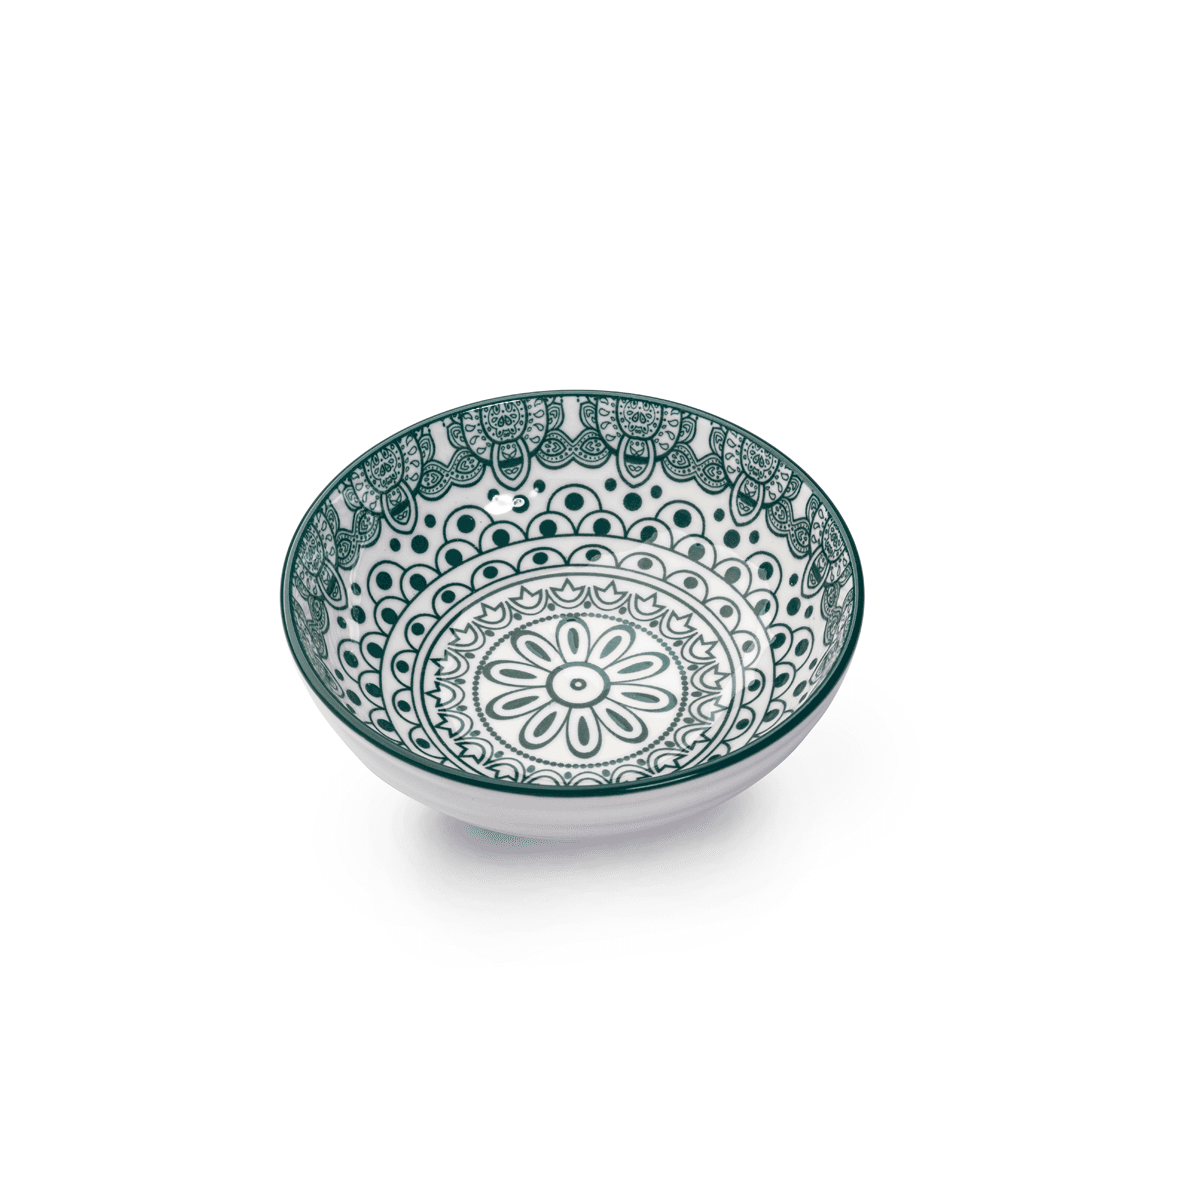 Che Brucia Arabesque Green Porcelain Round Dish 13 cm / 5" Green White Porcelain